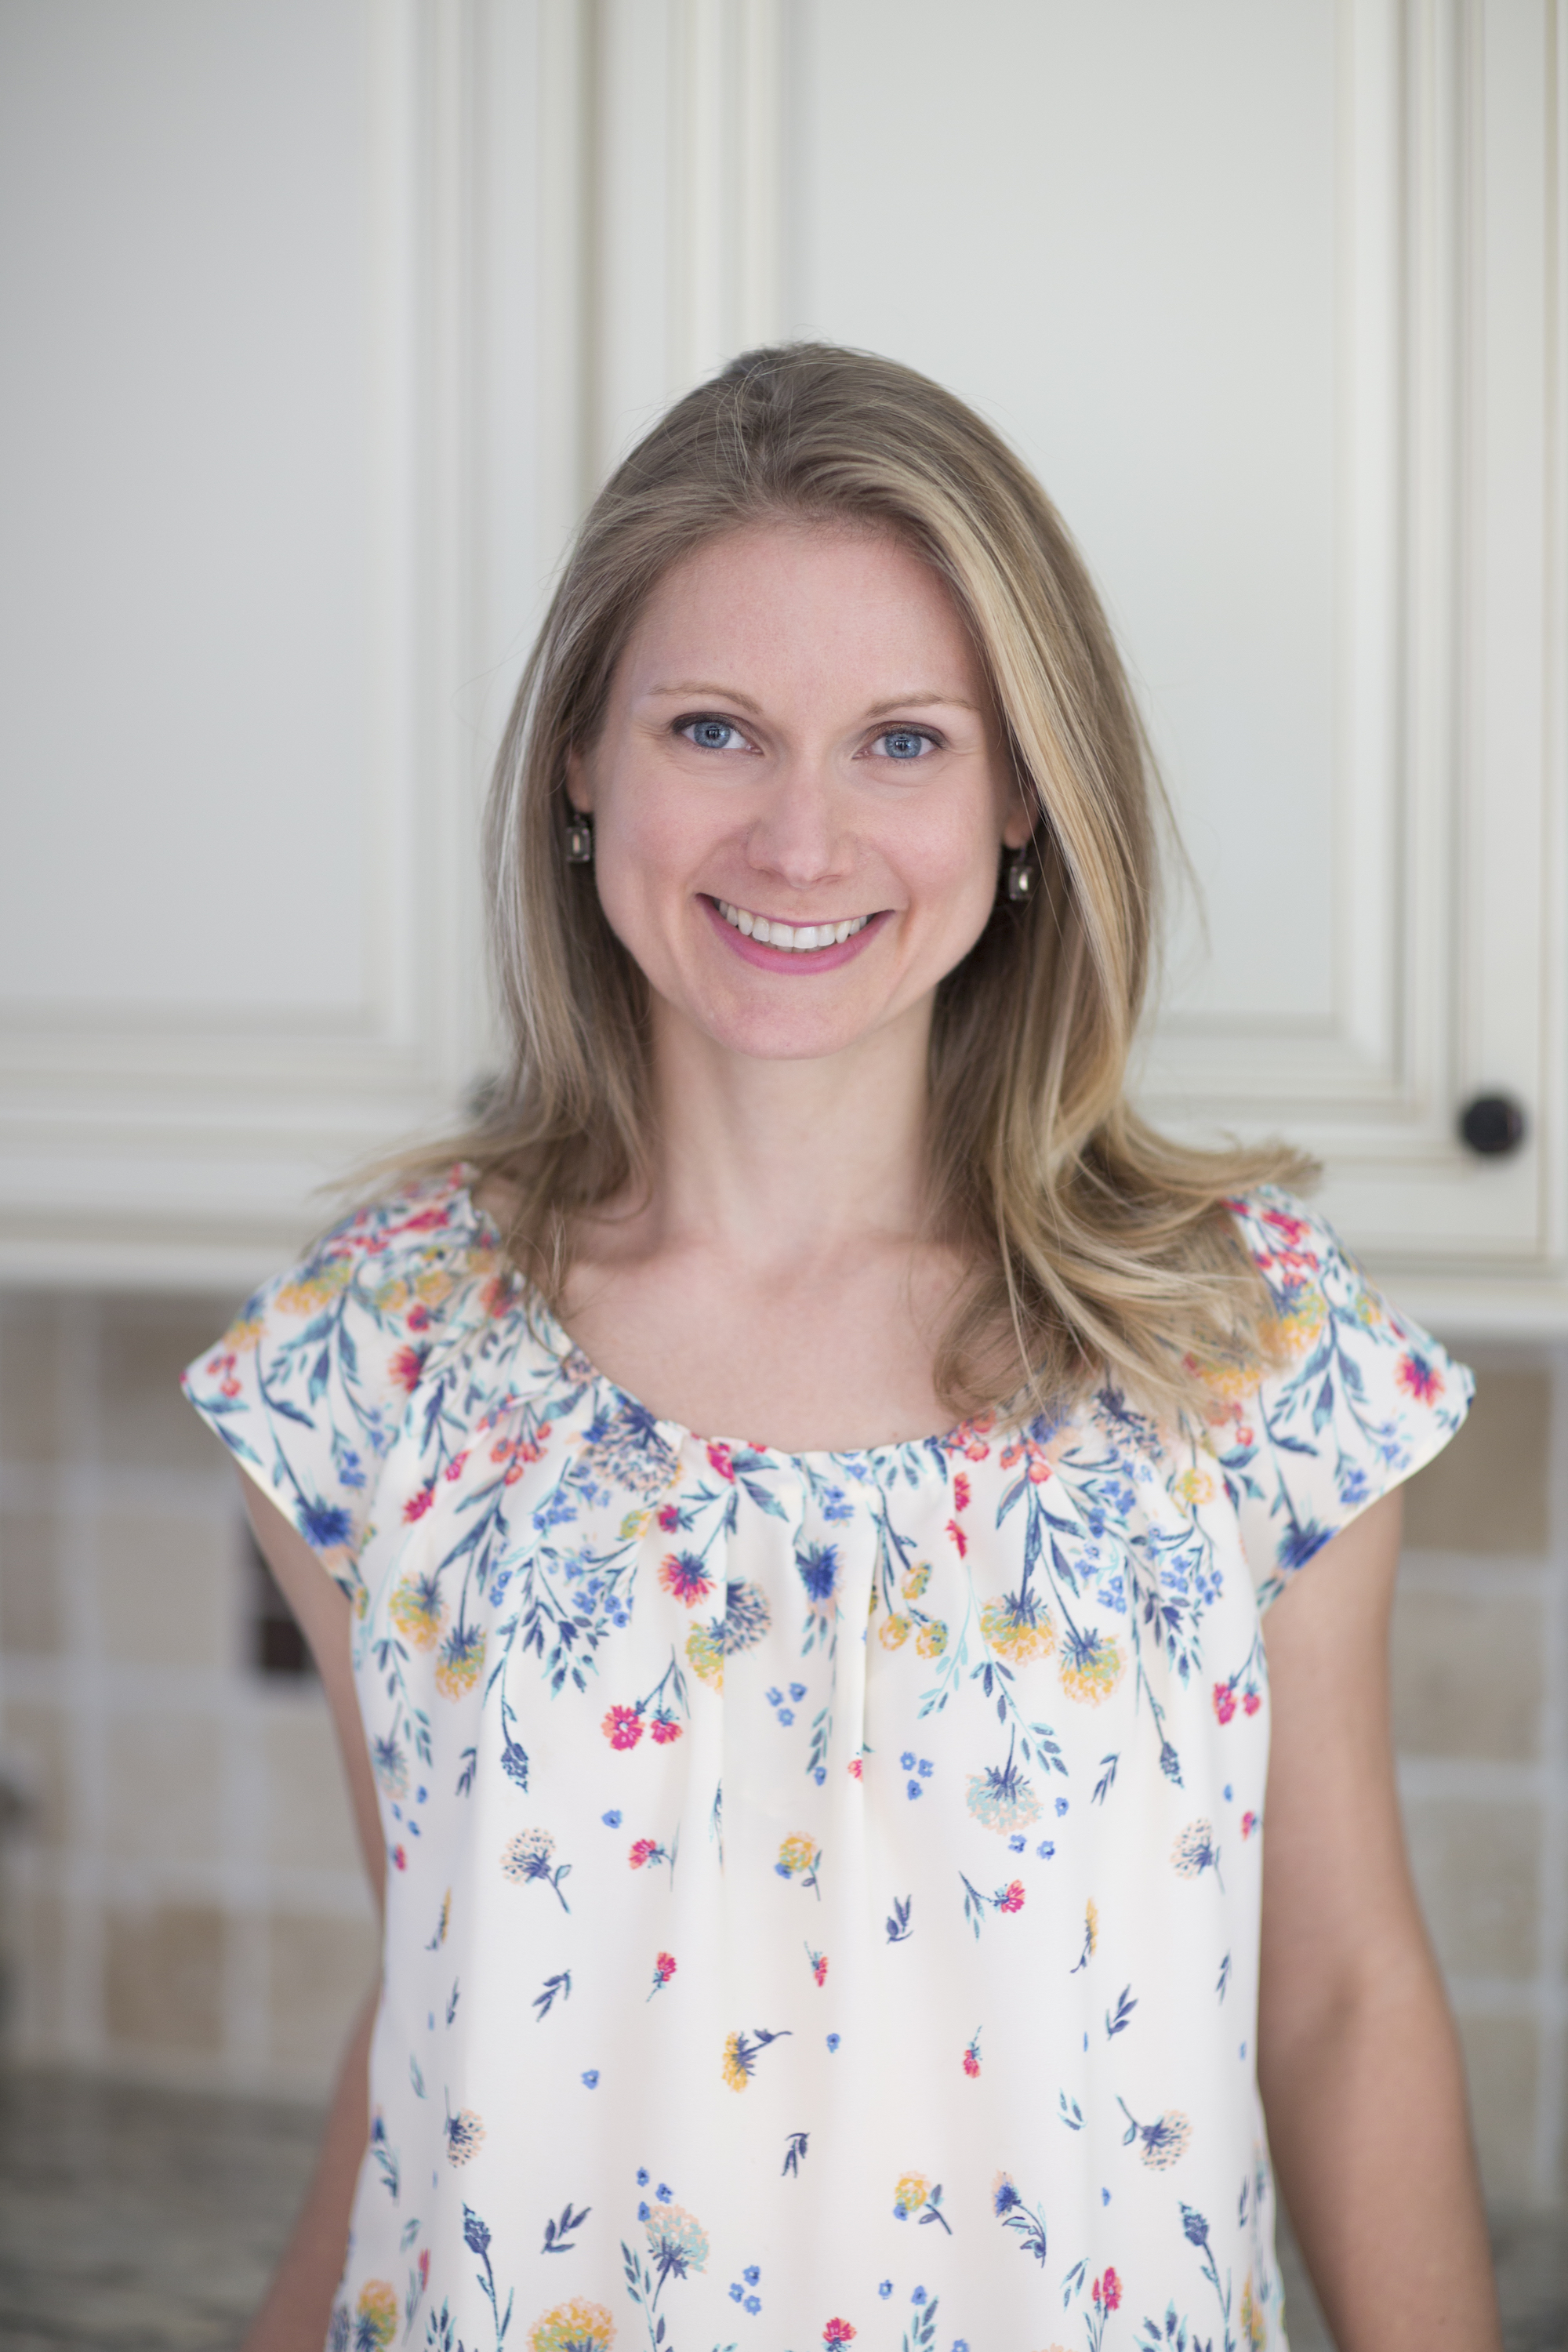 What’s In Her Fridge? Author Jolene Hart Shares Her Secrets For Eating Healthy